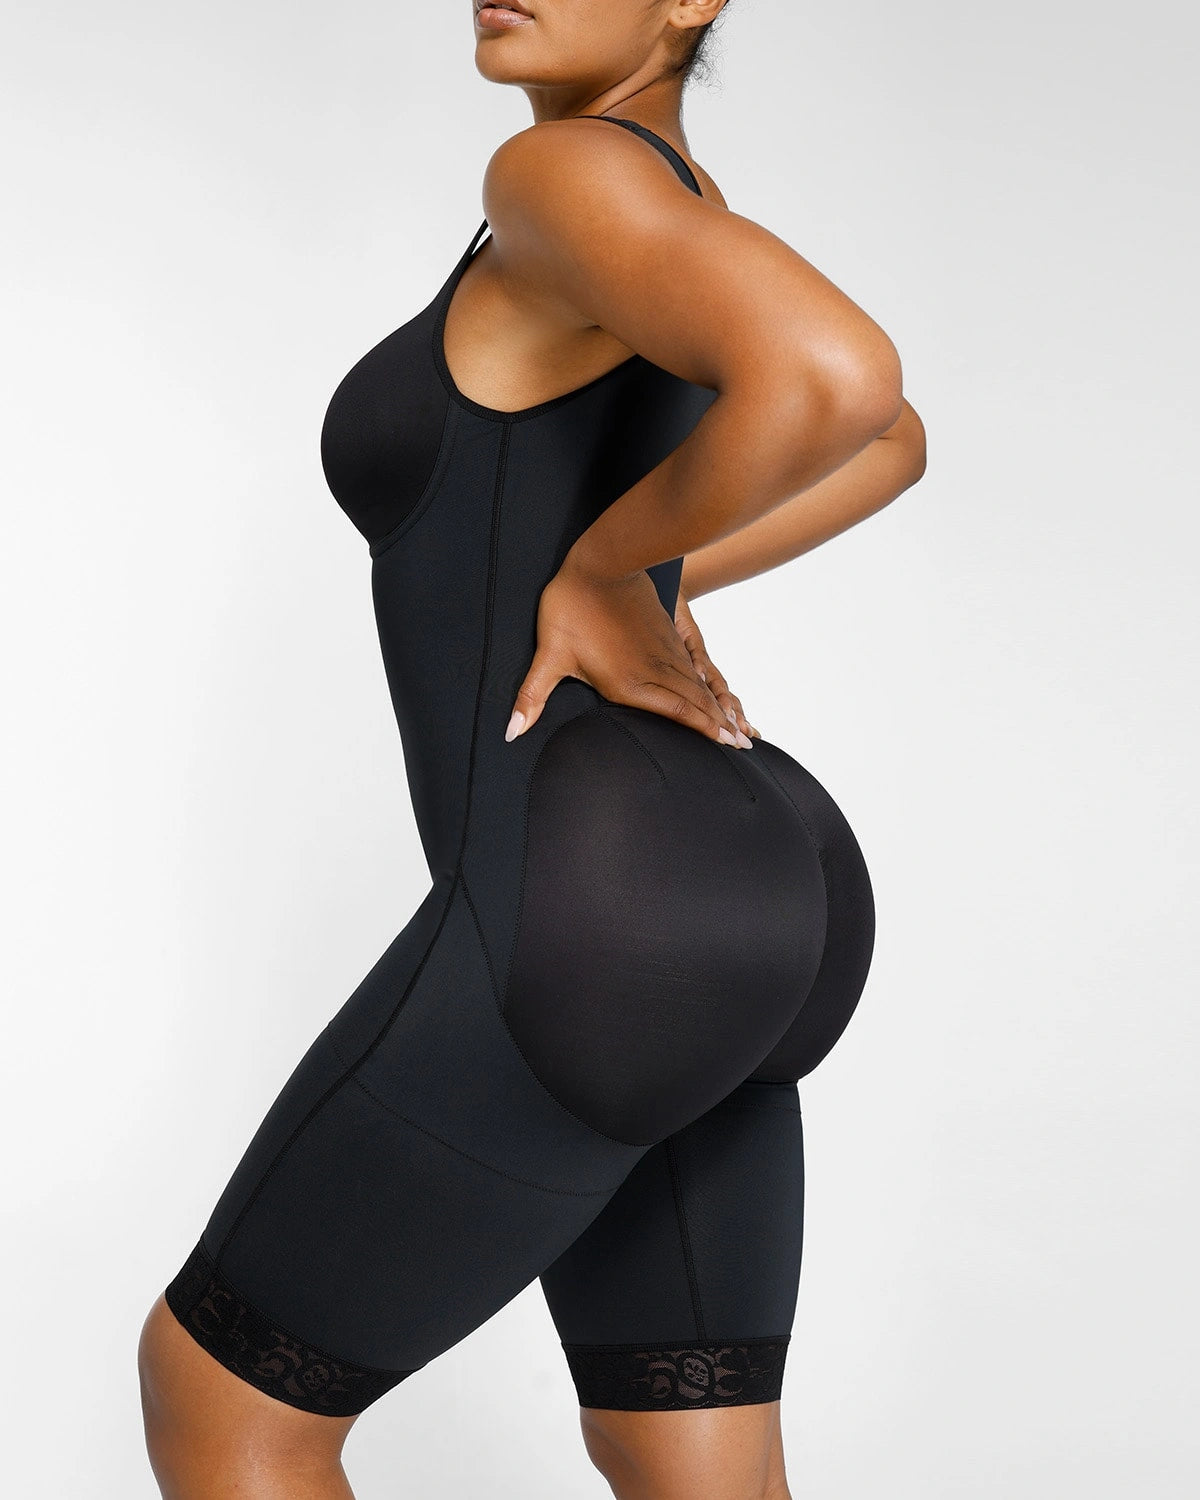 AirSlim® Full Body Butt-Lifting Bodysuit